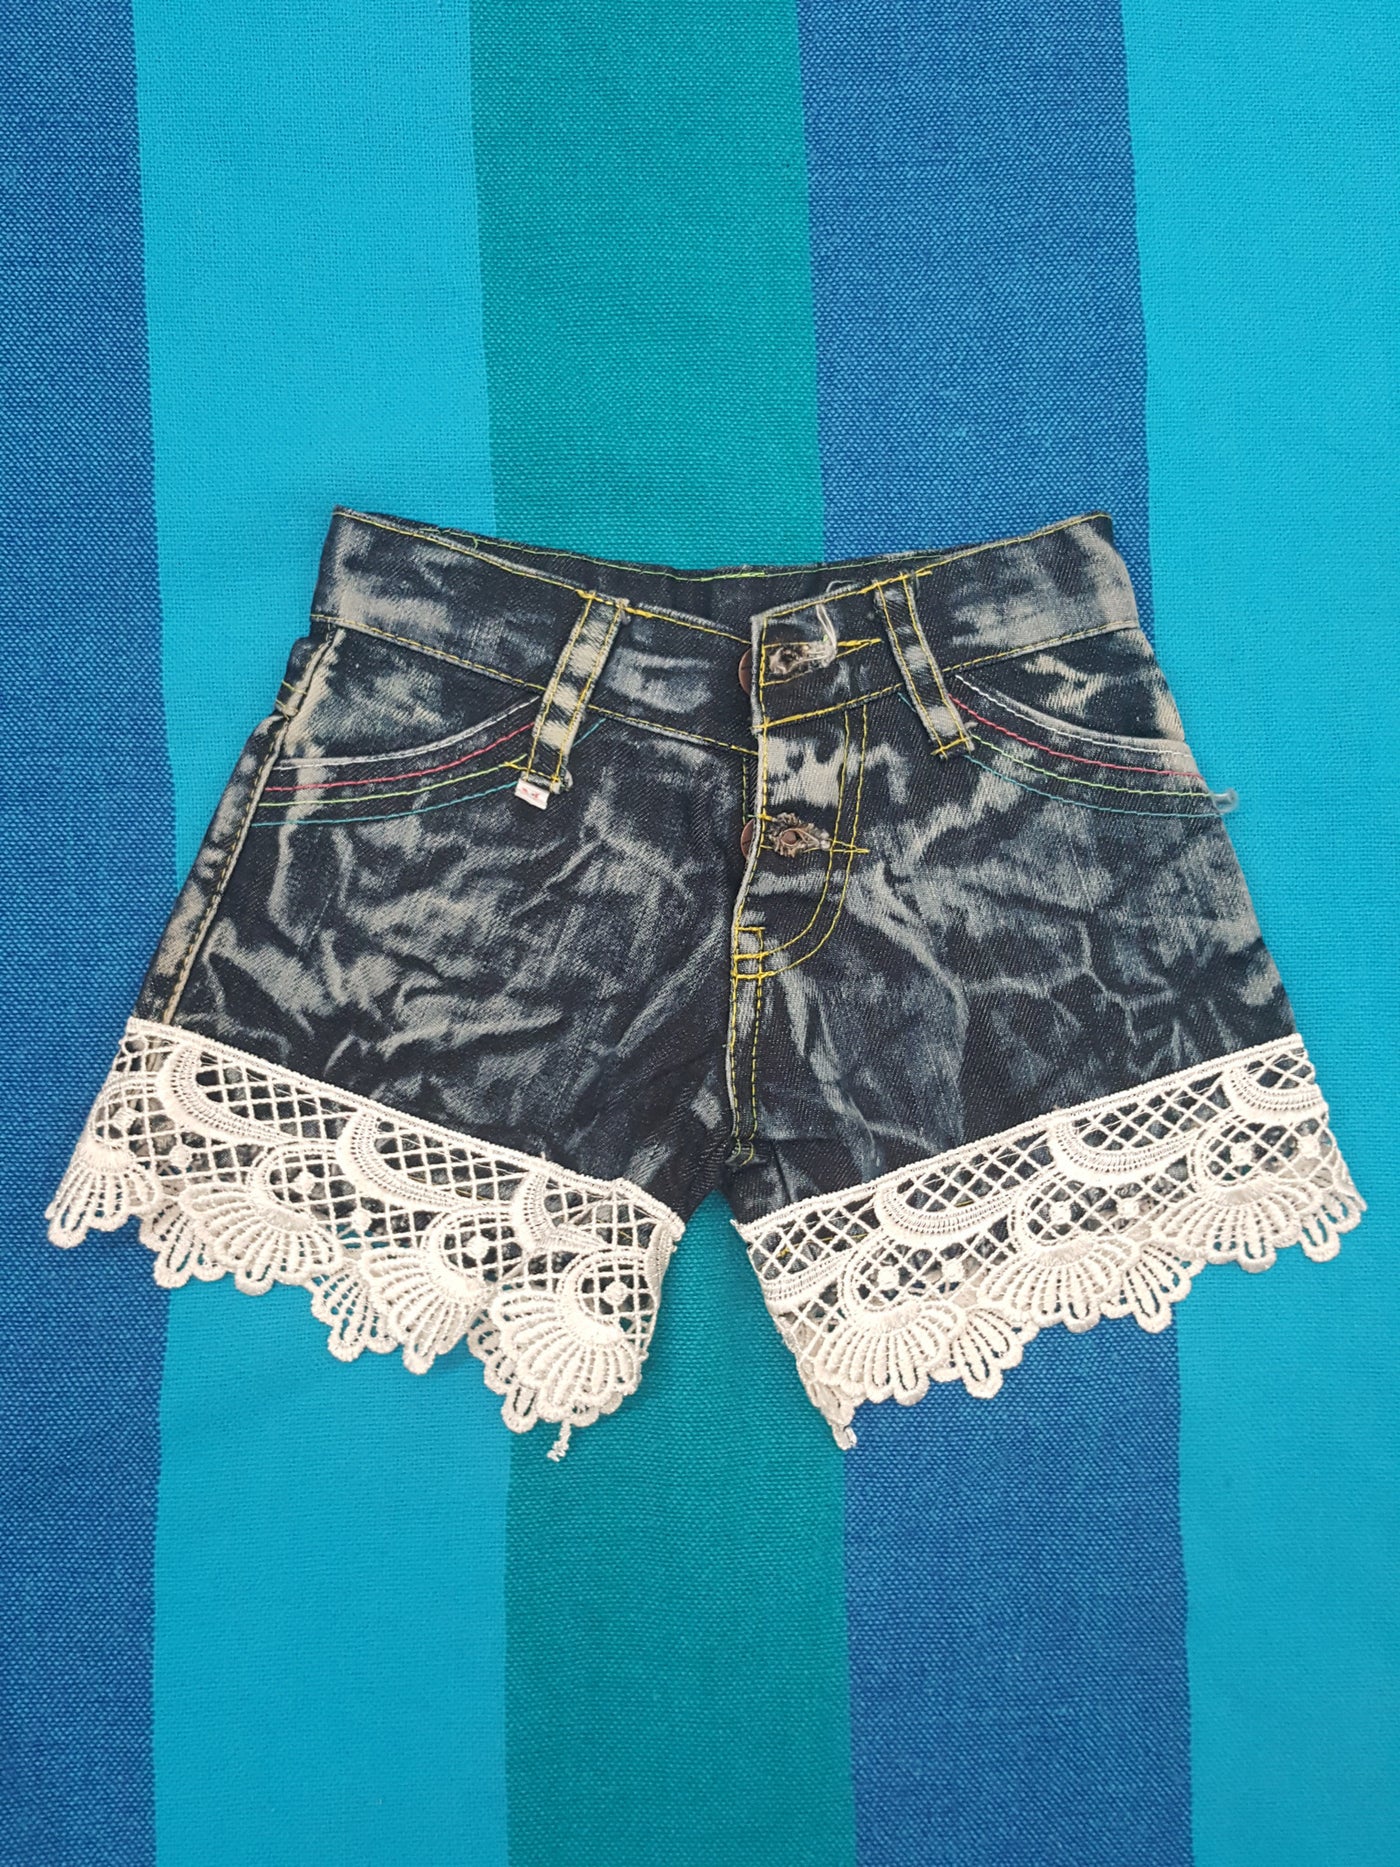 Shorts - Girls Denim Lace Shorts